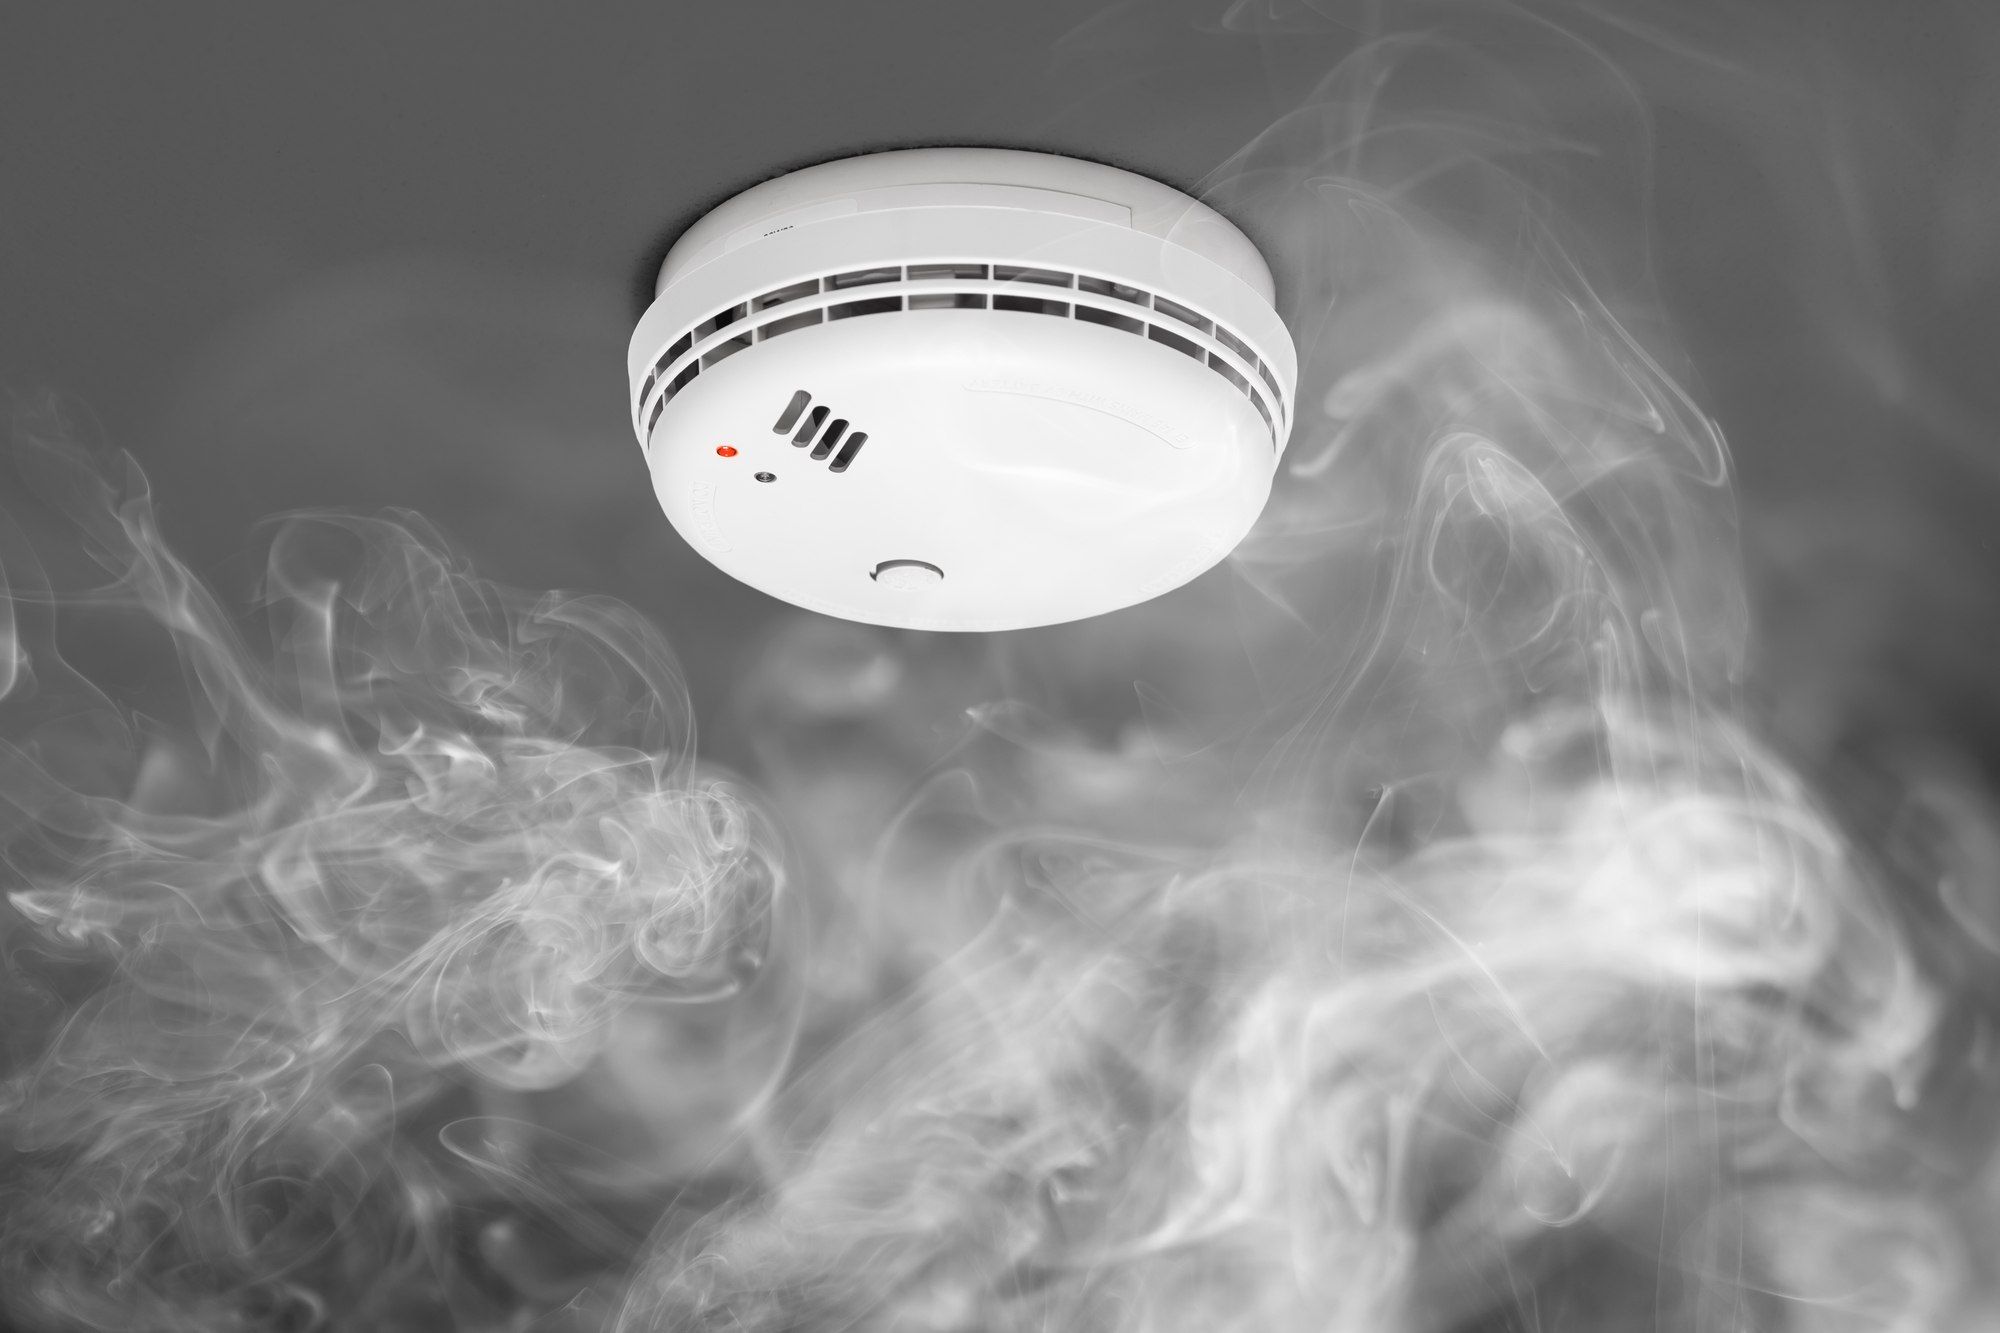 220K Kidde Smoke Alarms Recalled Due to Failure to Alert to a Fire